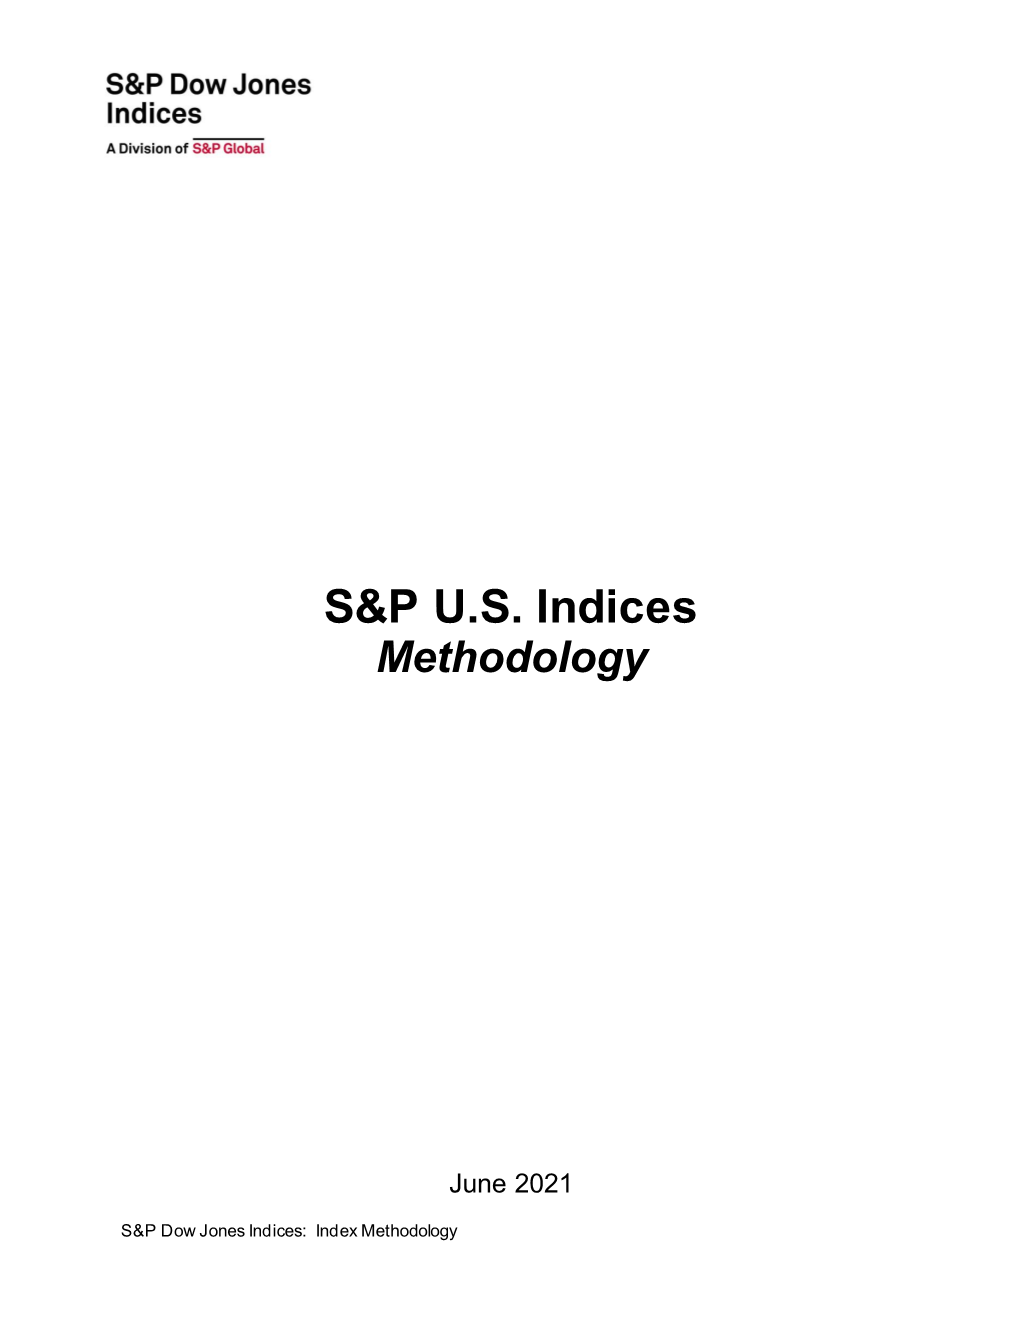 S&P U.S. Indices Methodology